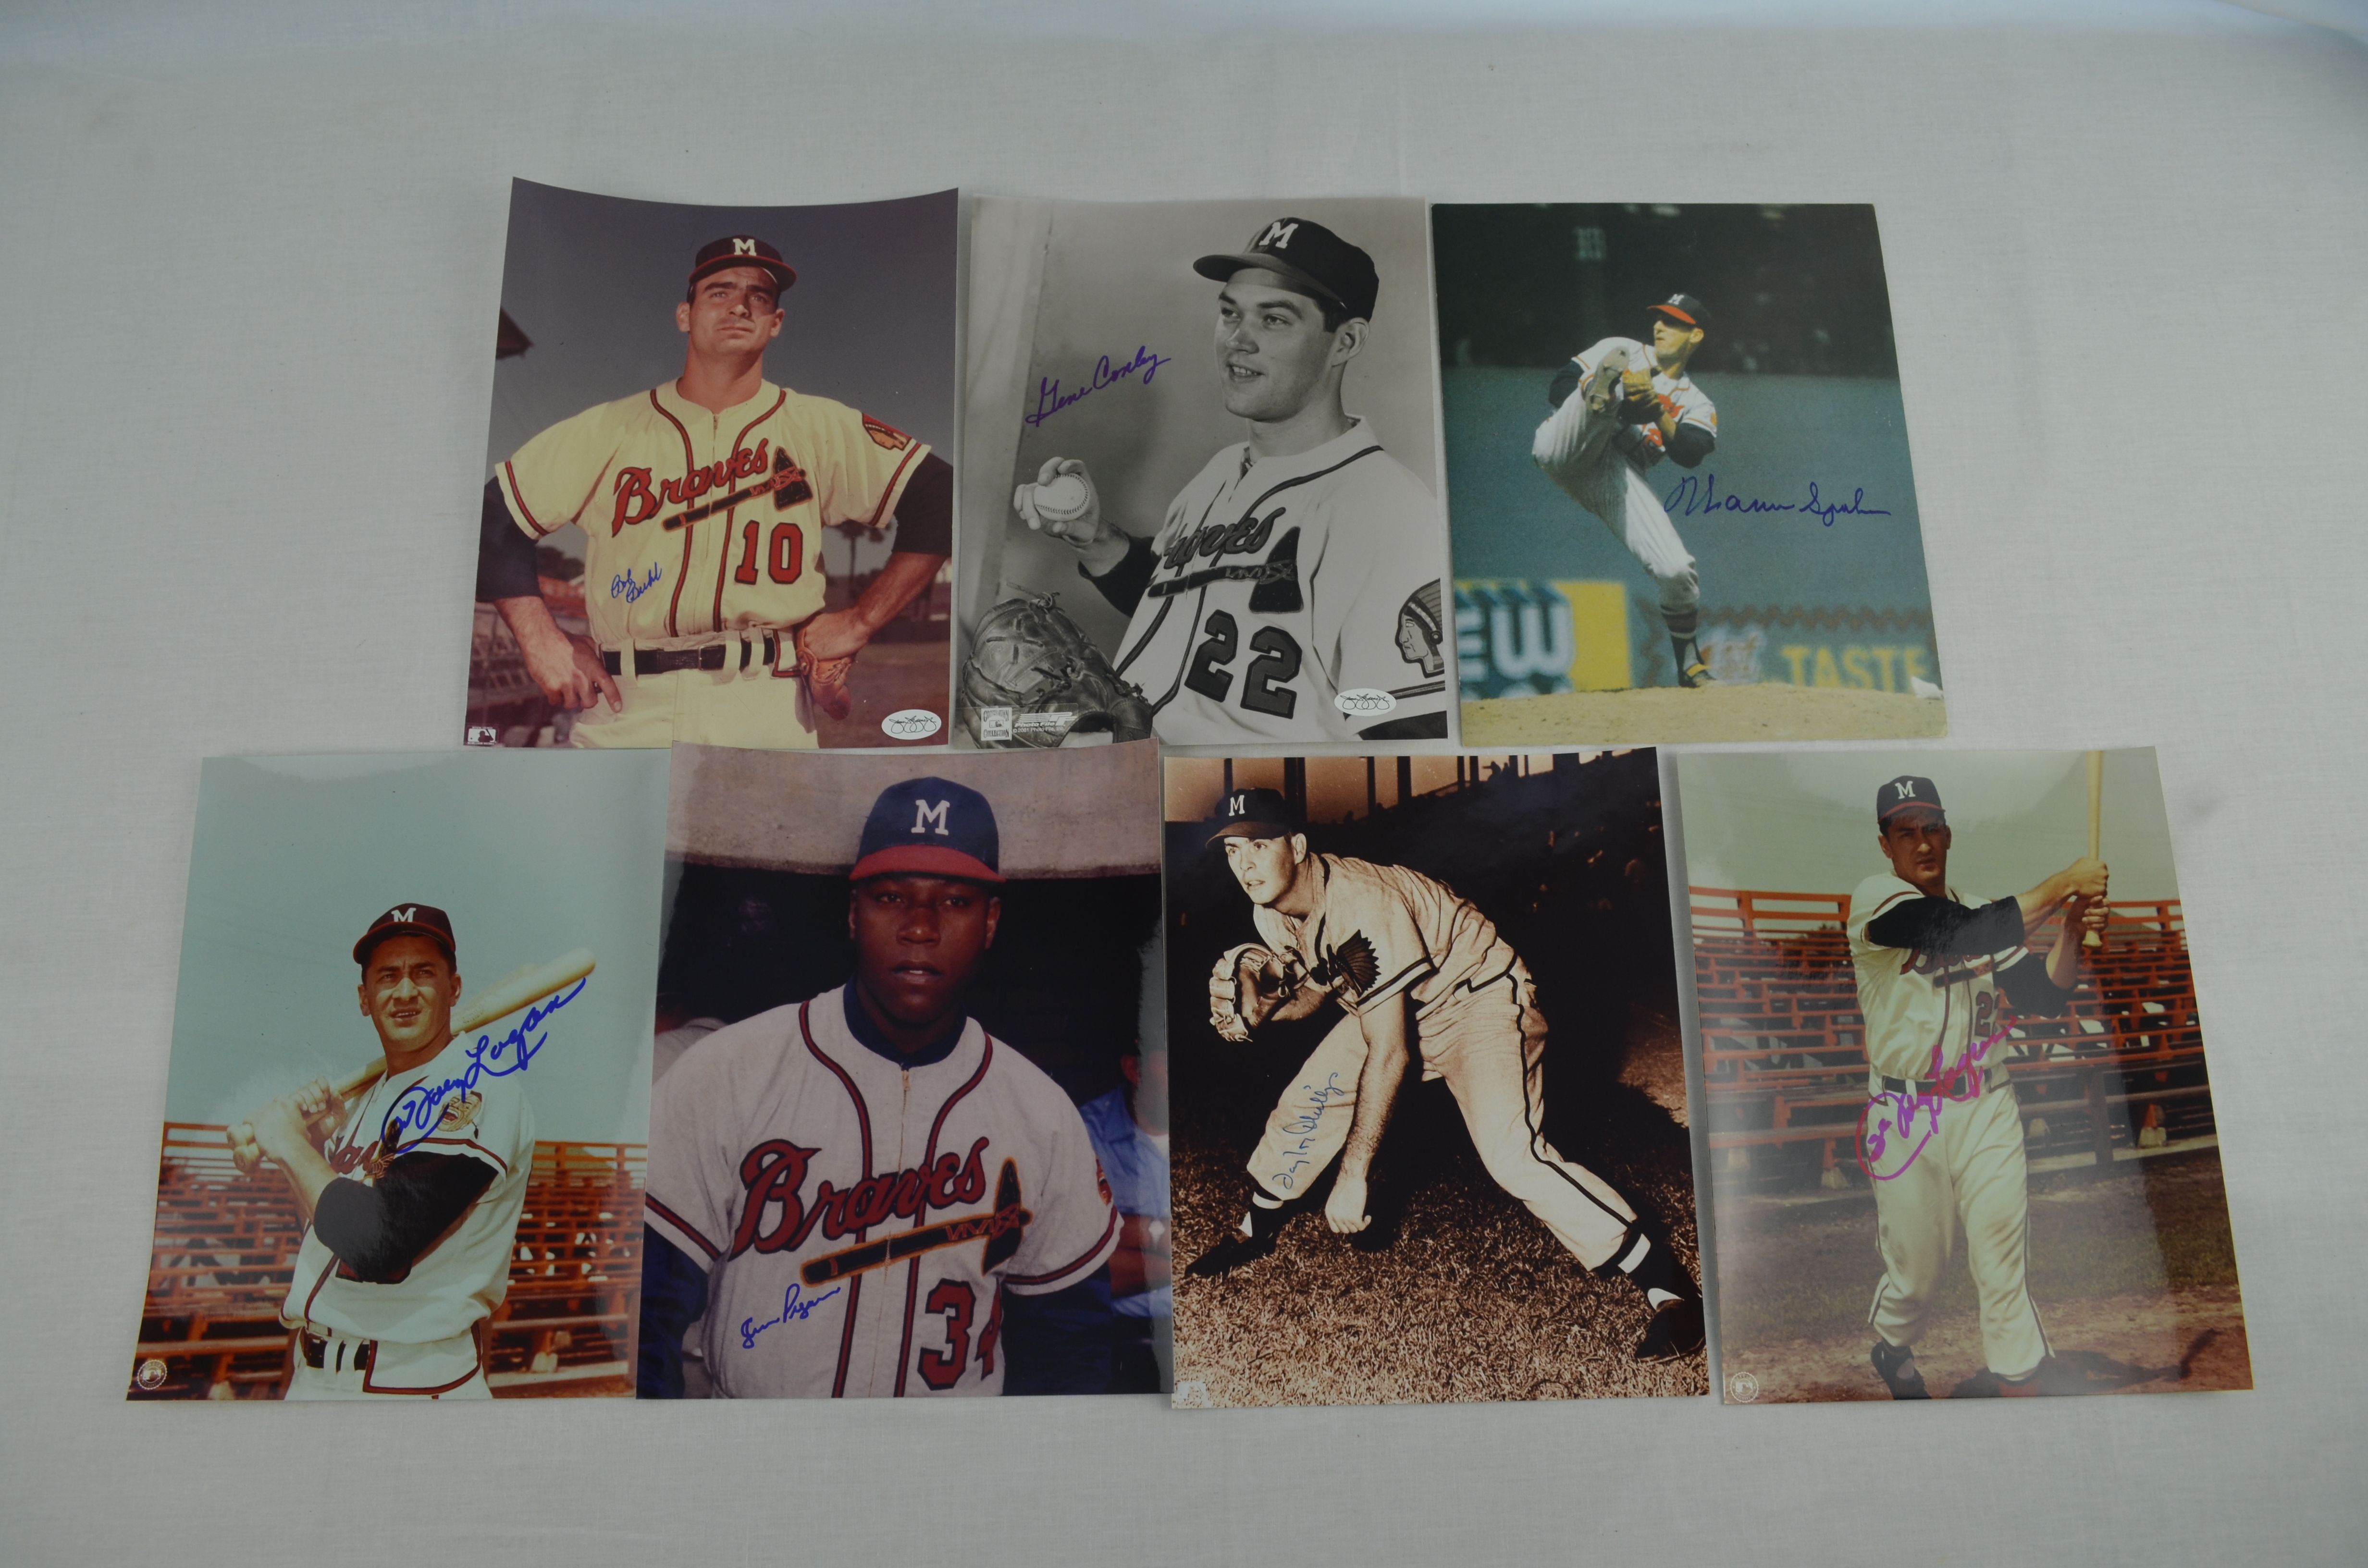 Warren Spahn Autographed 8x10 Baseball Photo (JSA)